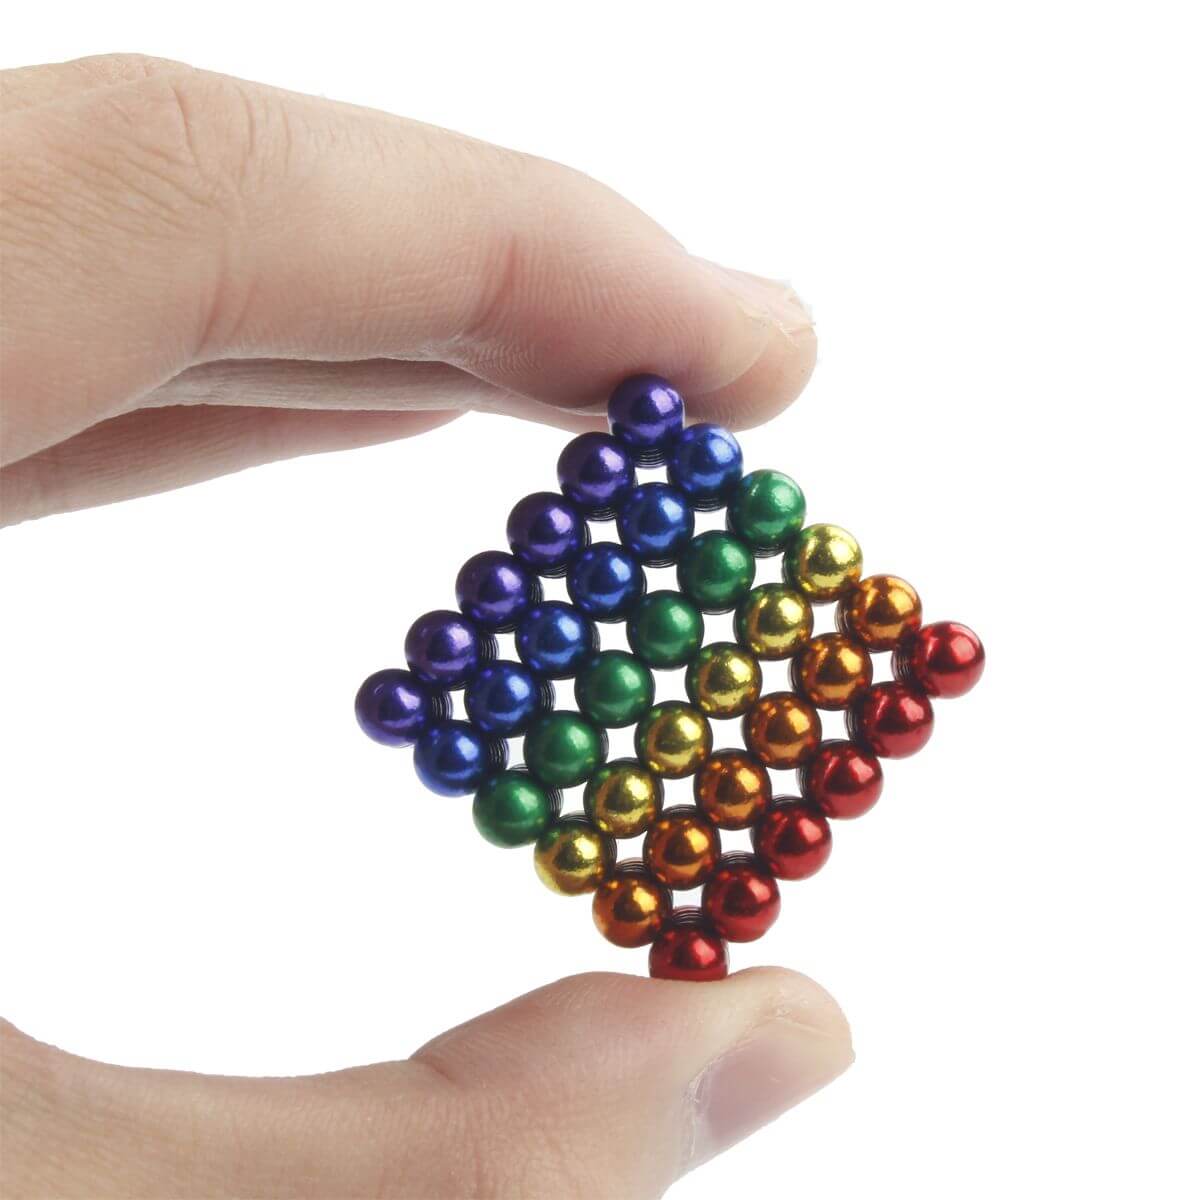 ordlyd søvn nationalisme Etkeni - Do not stop playing with 216 magnetic balls rainbow -NEOCUBE